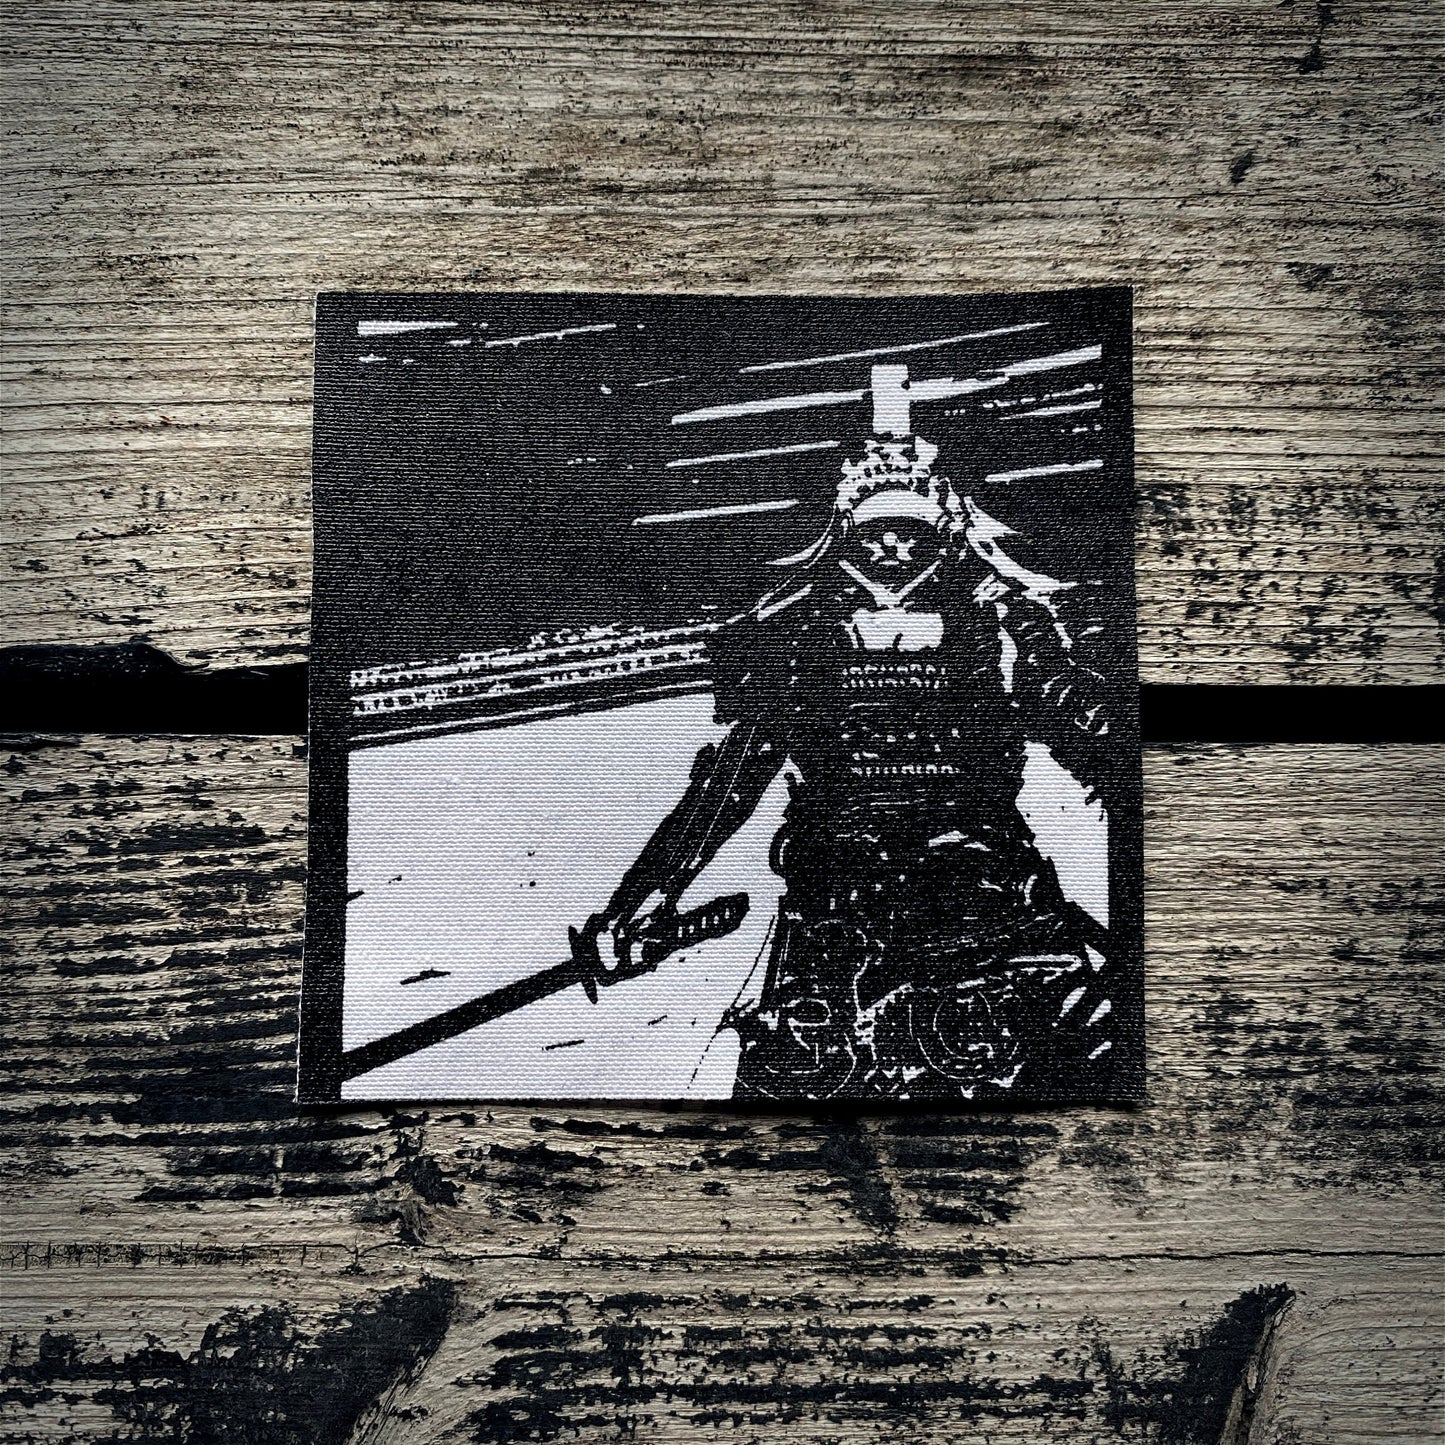 Samurai, battle stance - screen printed PATCH